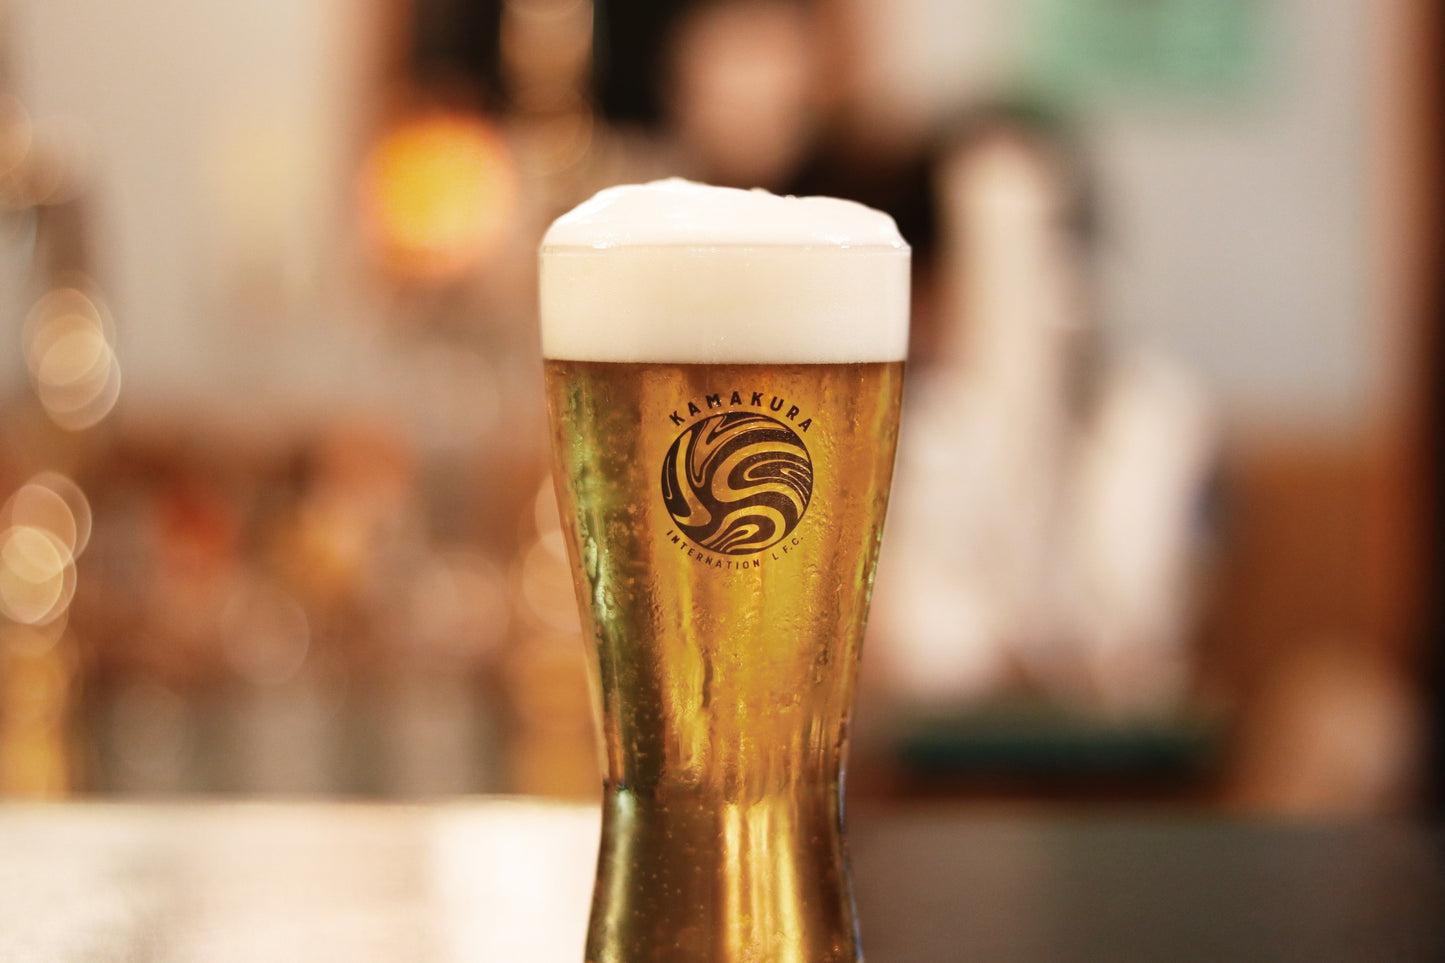 Kamakura Inter Beer Glass